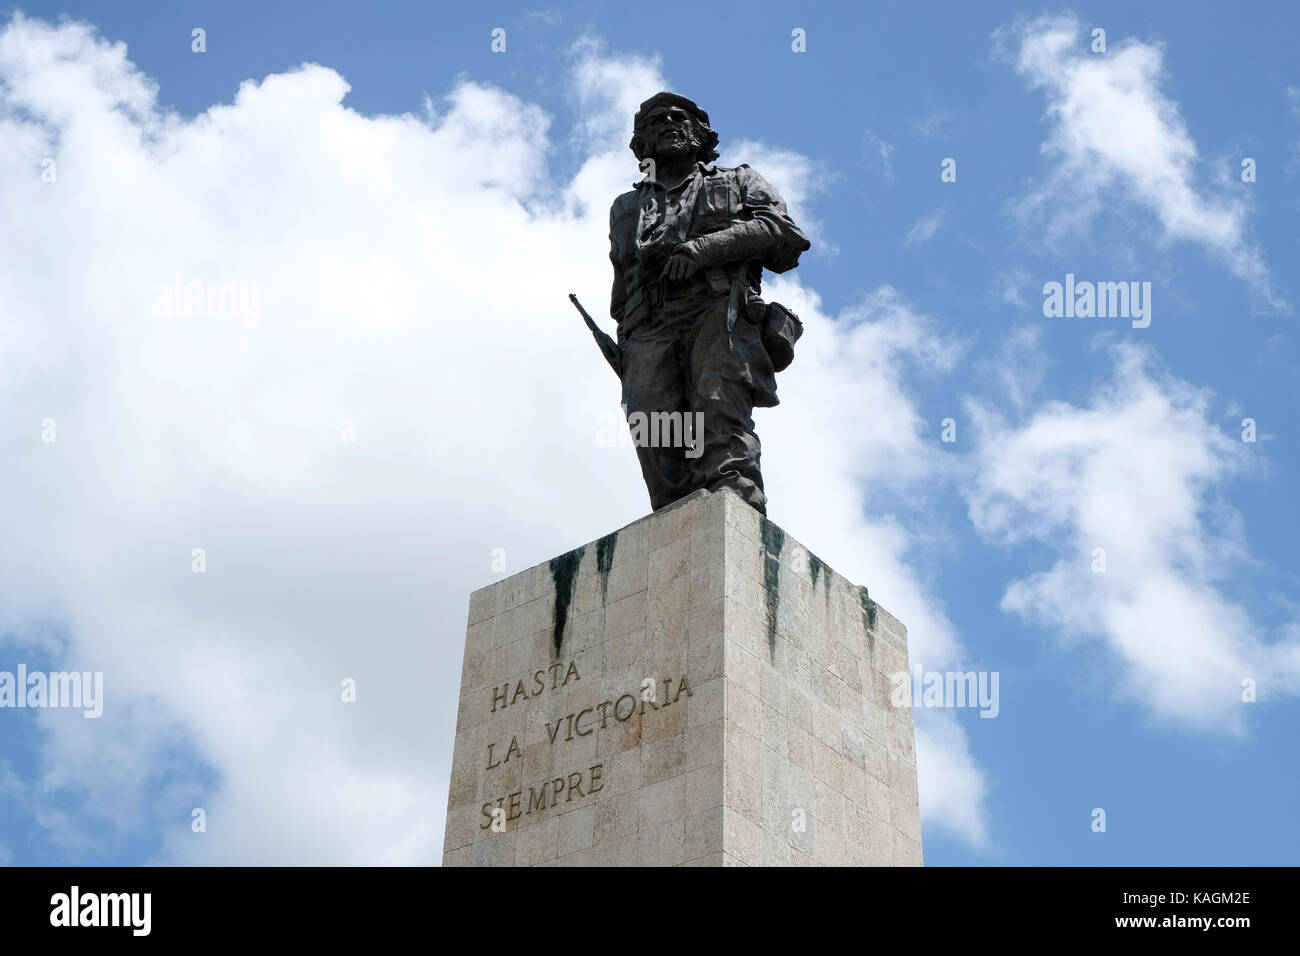 The Che Guevara Mausoleum and statue in Santa Clara, Cuba. Stock Photo